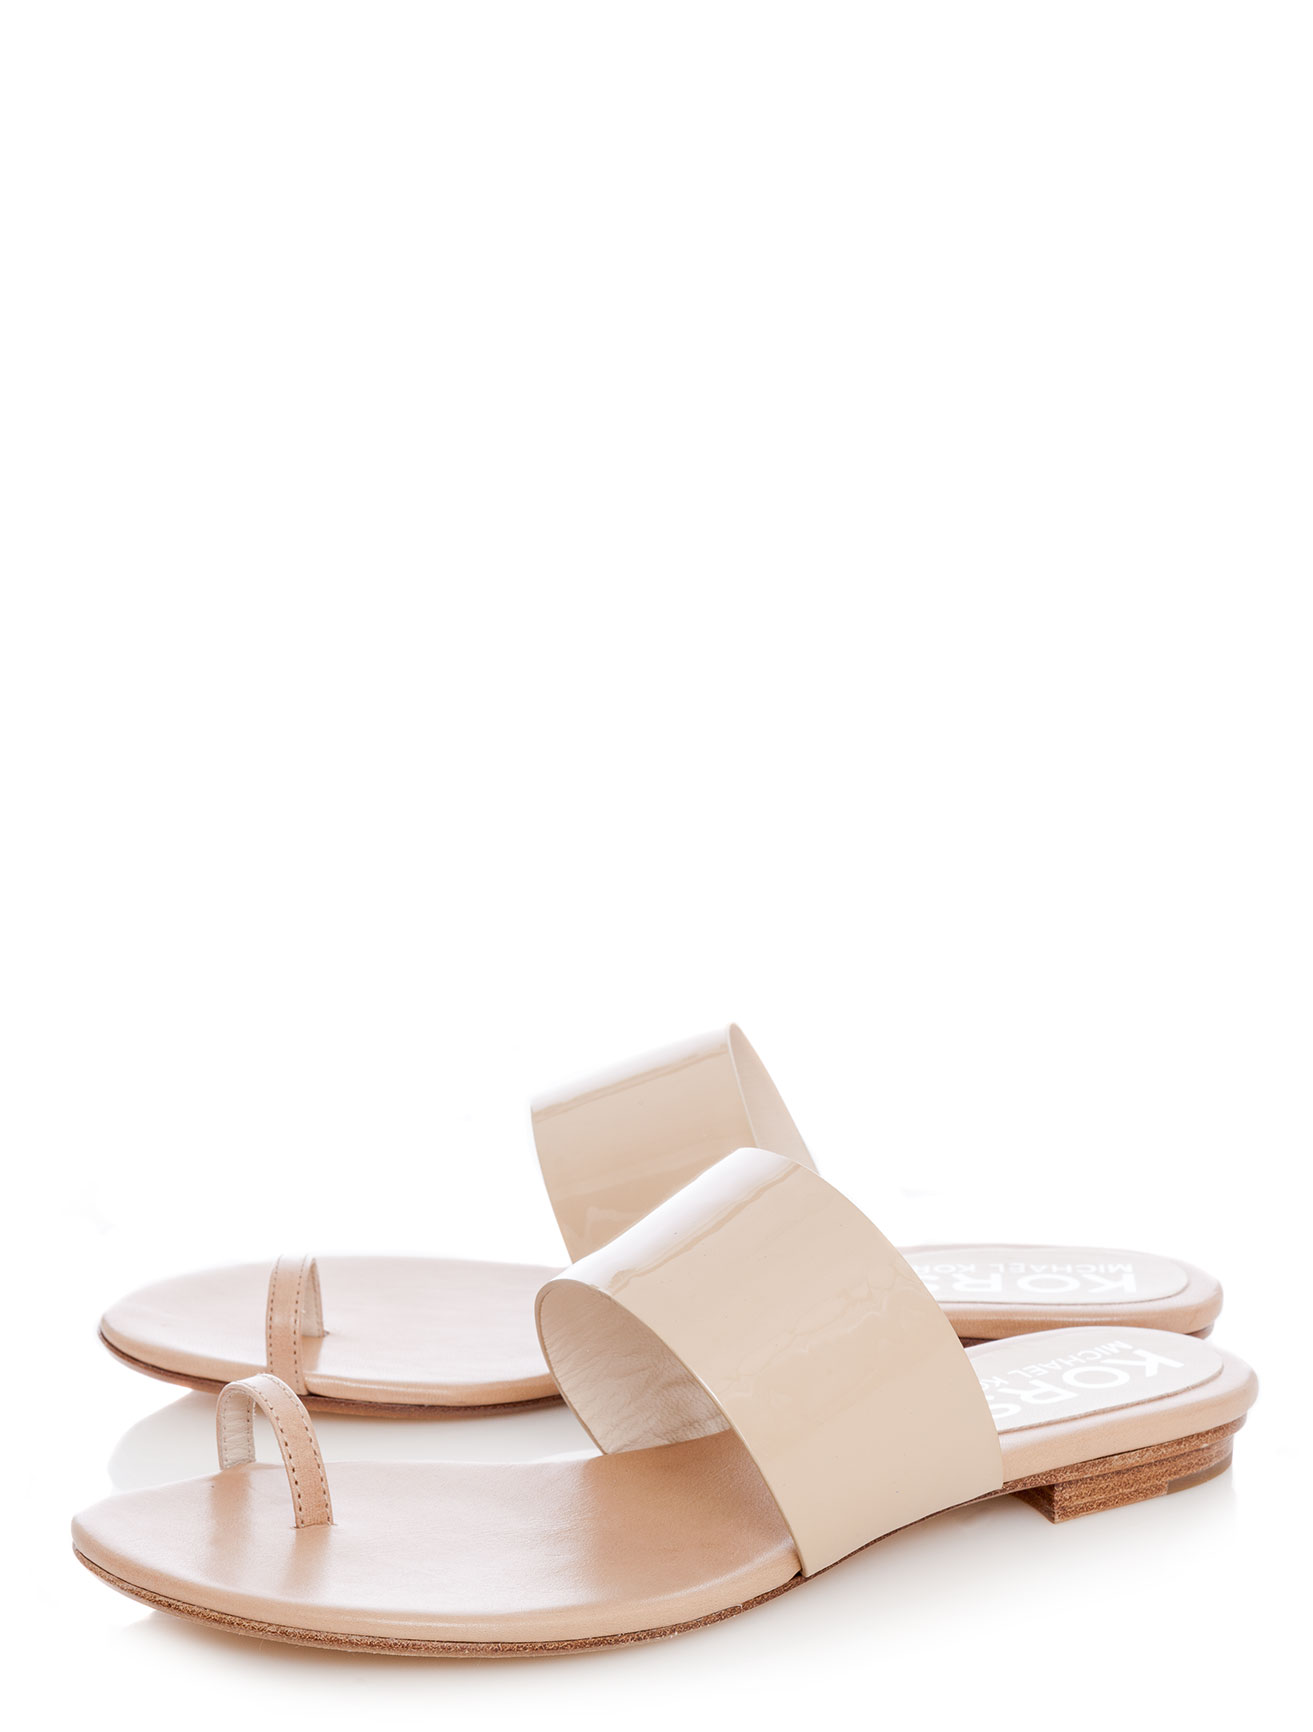 Kors By Michael Kors Zen Toe Ring Sandals in Beige (nude) | Lyst